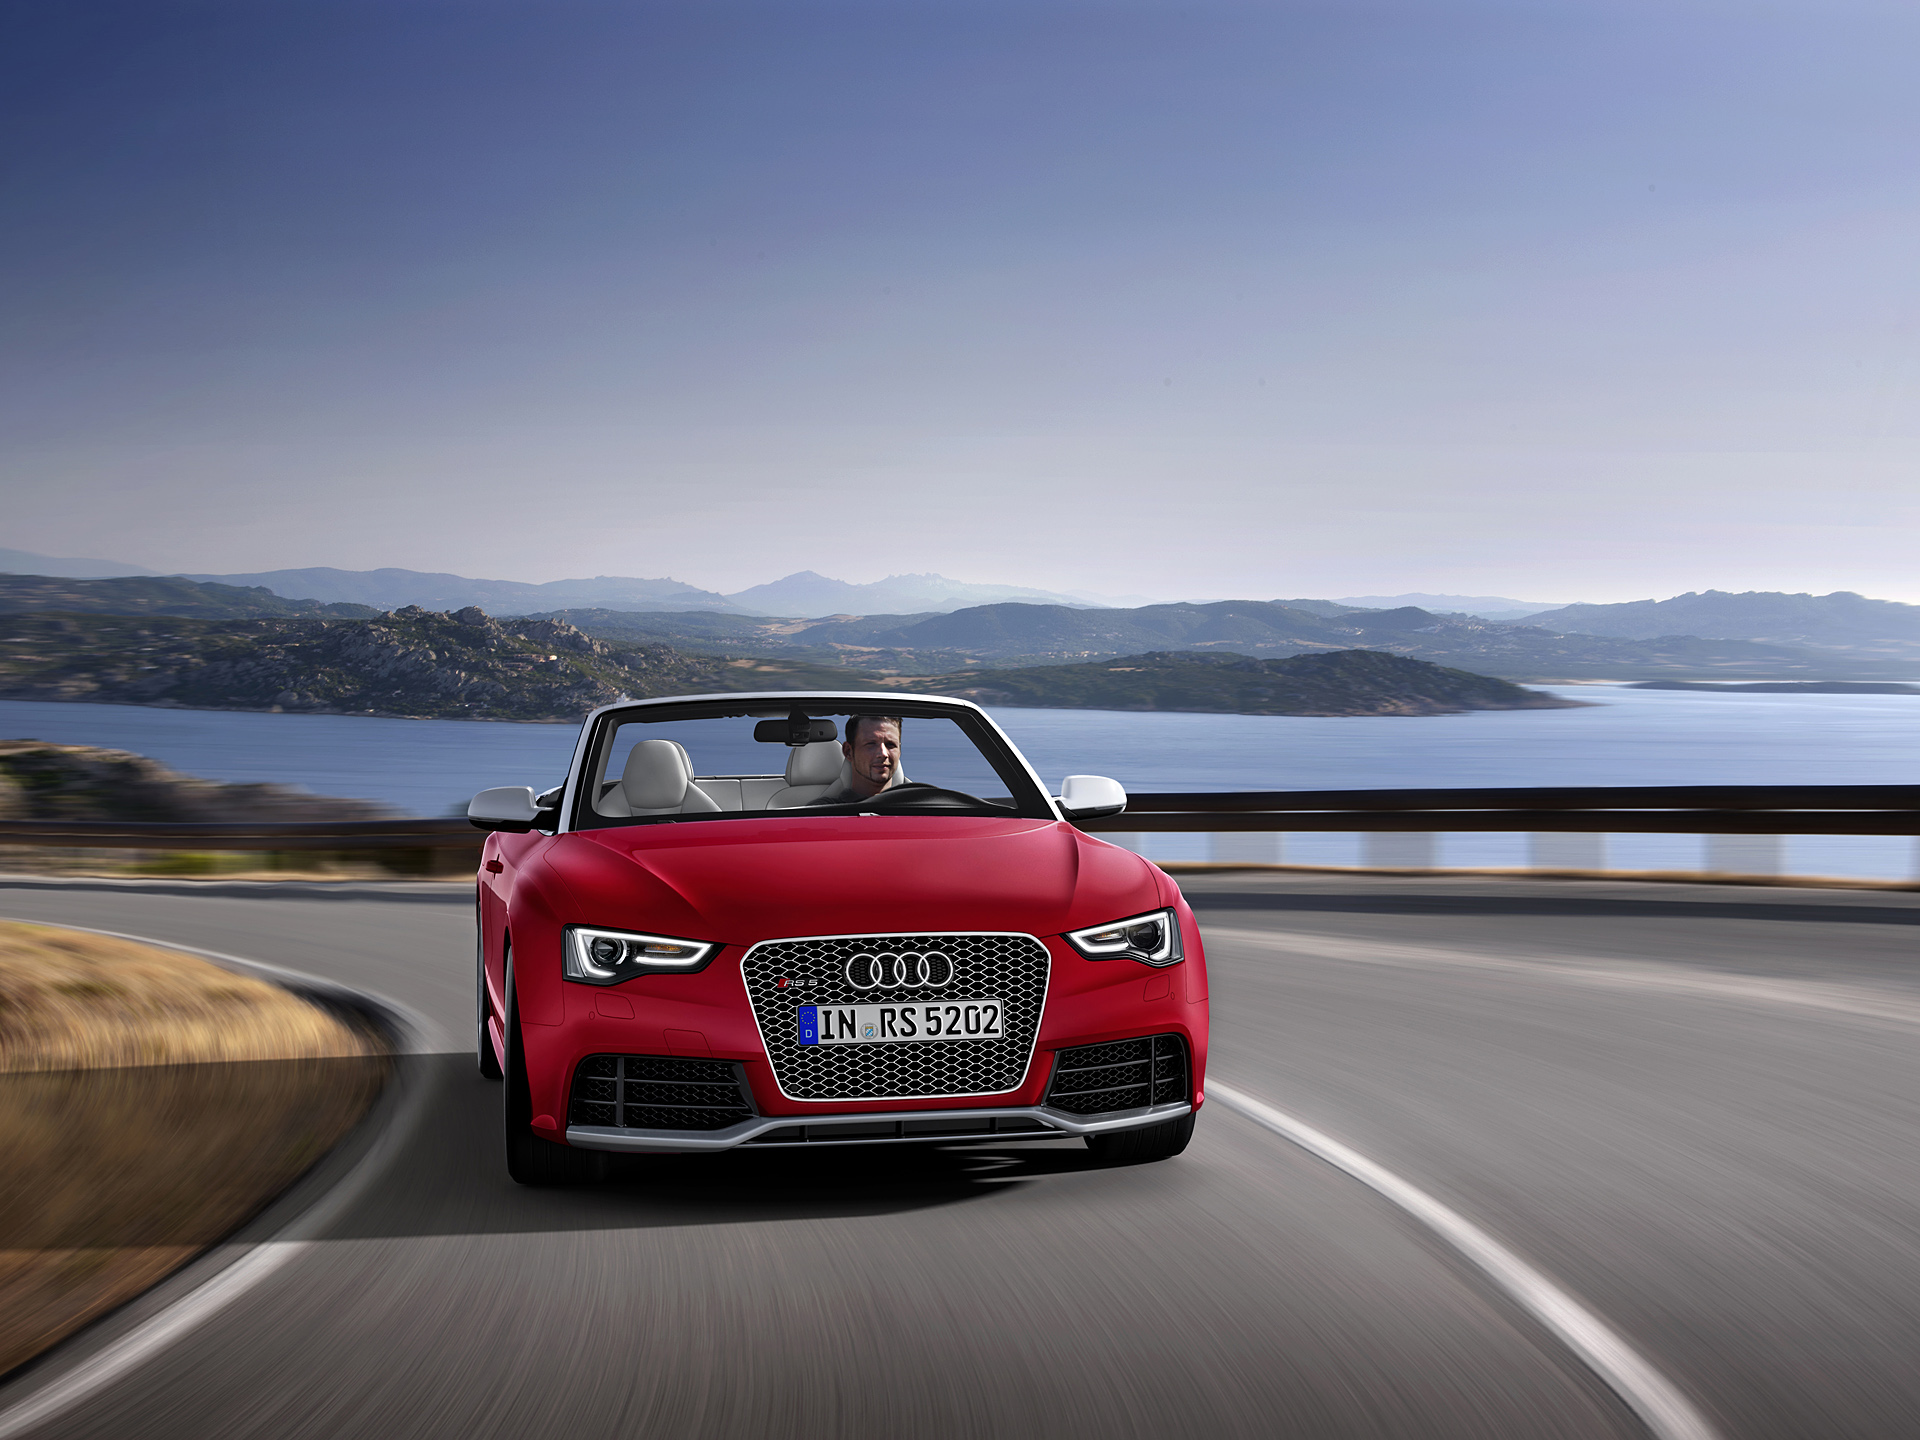 Descarga gratuita de fondo de pantalla para móvil de Audi Rs5, Audi, Vehículos.